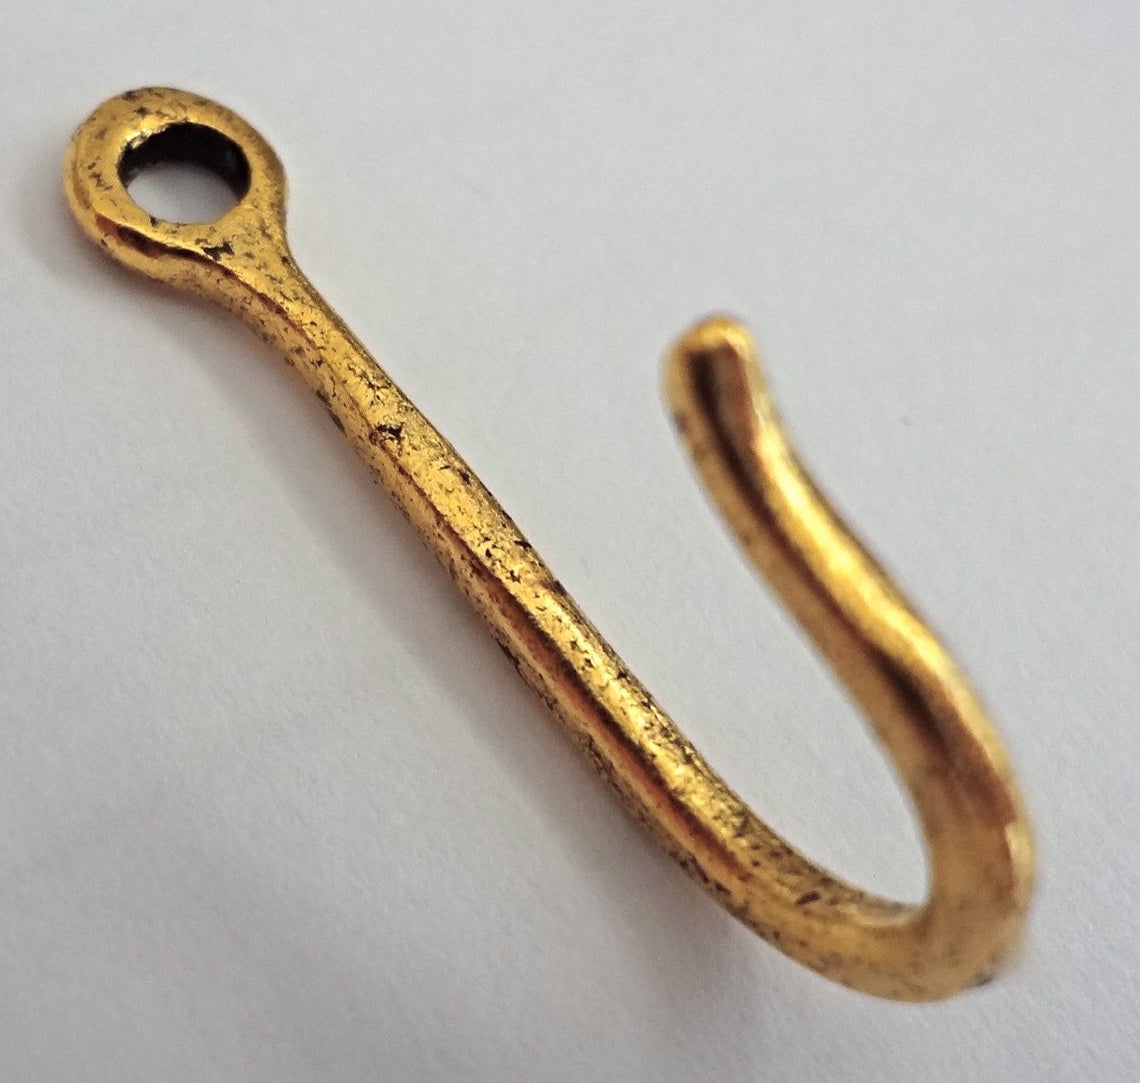 Decorative Push Pin Hooks, Decorative Push Pins, Unique Gold Pin Hooks, 15 Piece Metal Hook Set